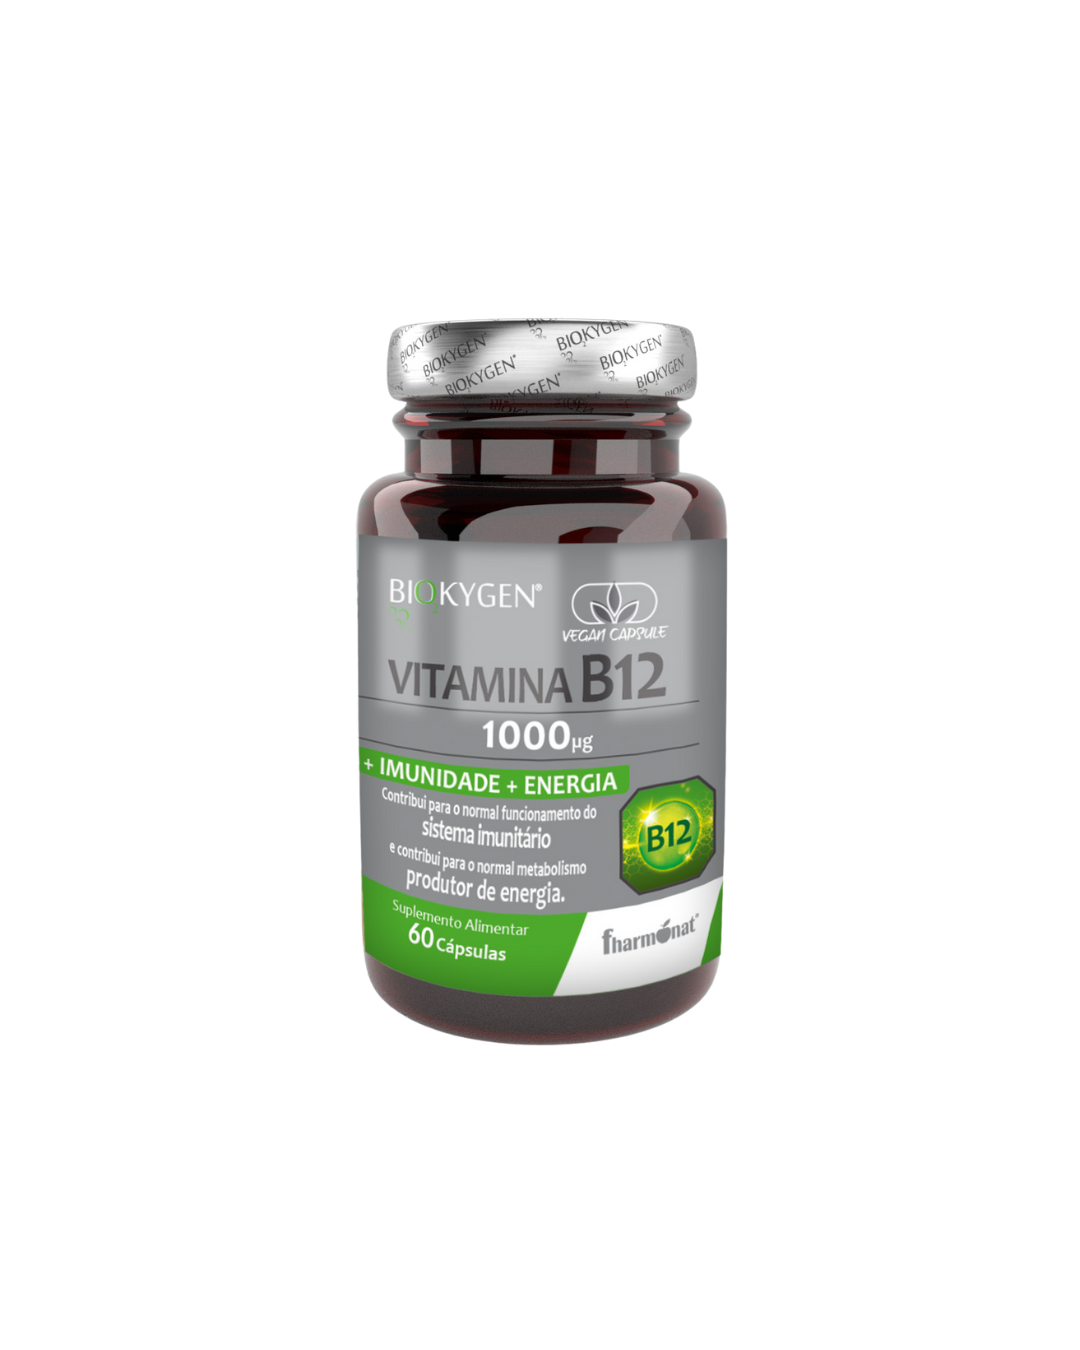 Biokygen Vitamina B12 60 Caps - Fharmonat